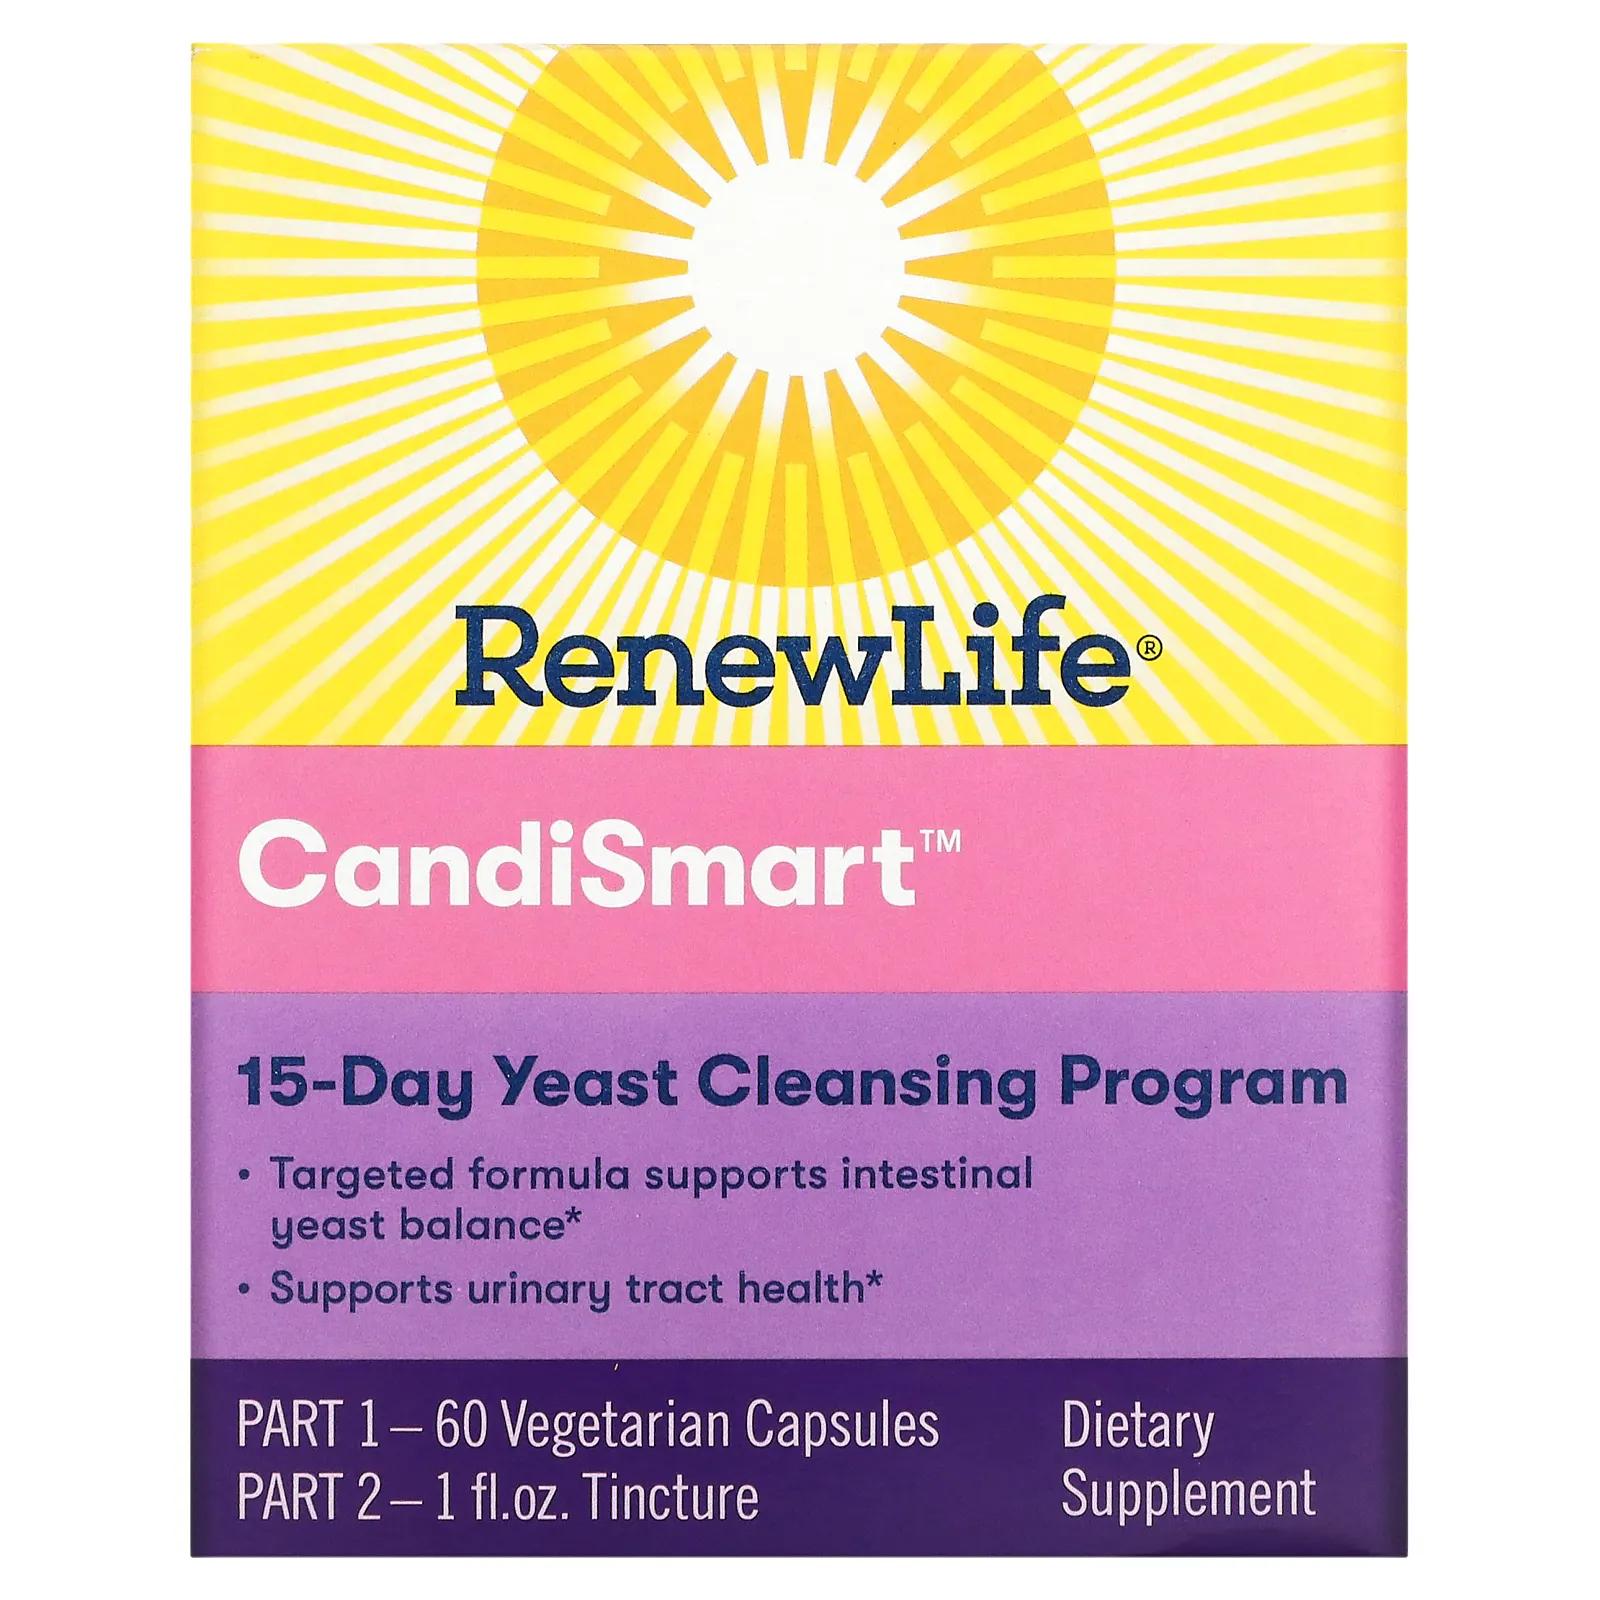 Renew Life Целевая Candi Smart очищающая дрожжевая формула 15-дневная программа 2-компонентная программа